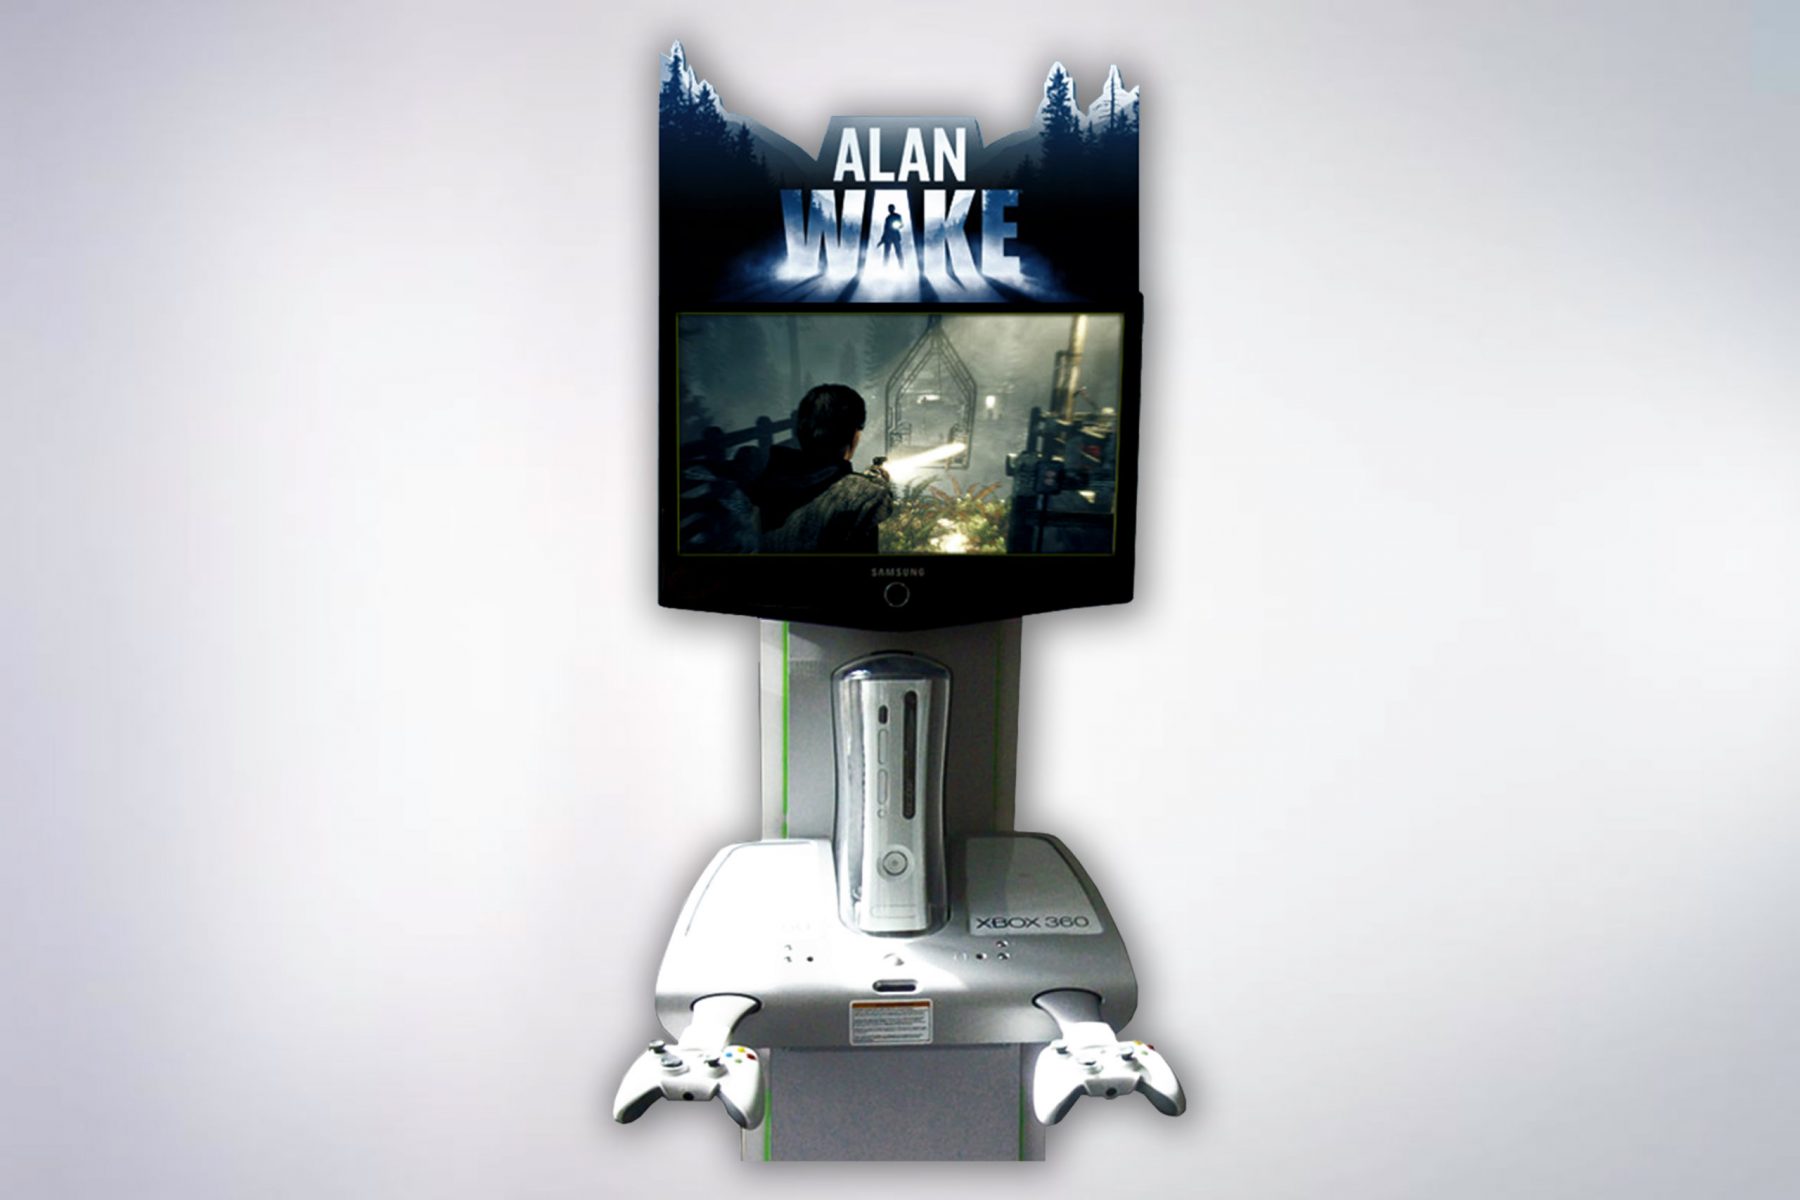 Alan-Wake-Monitor-Stanze-scaled